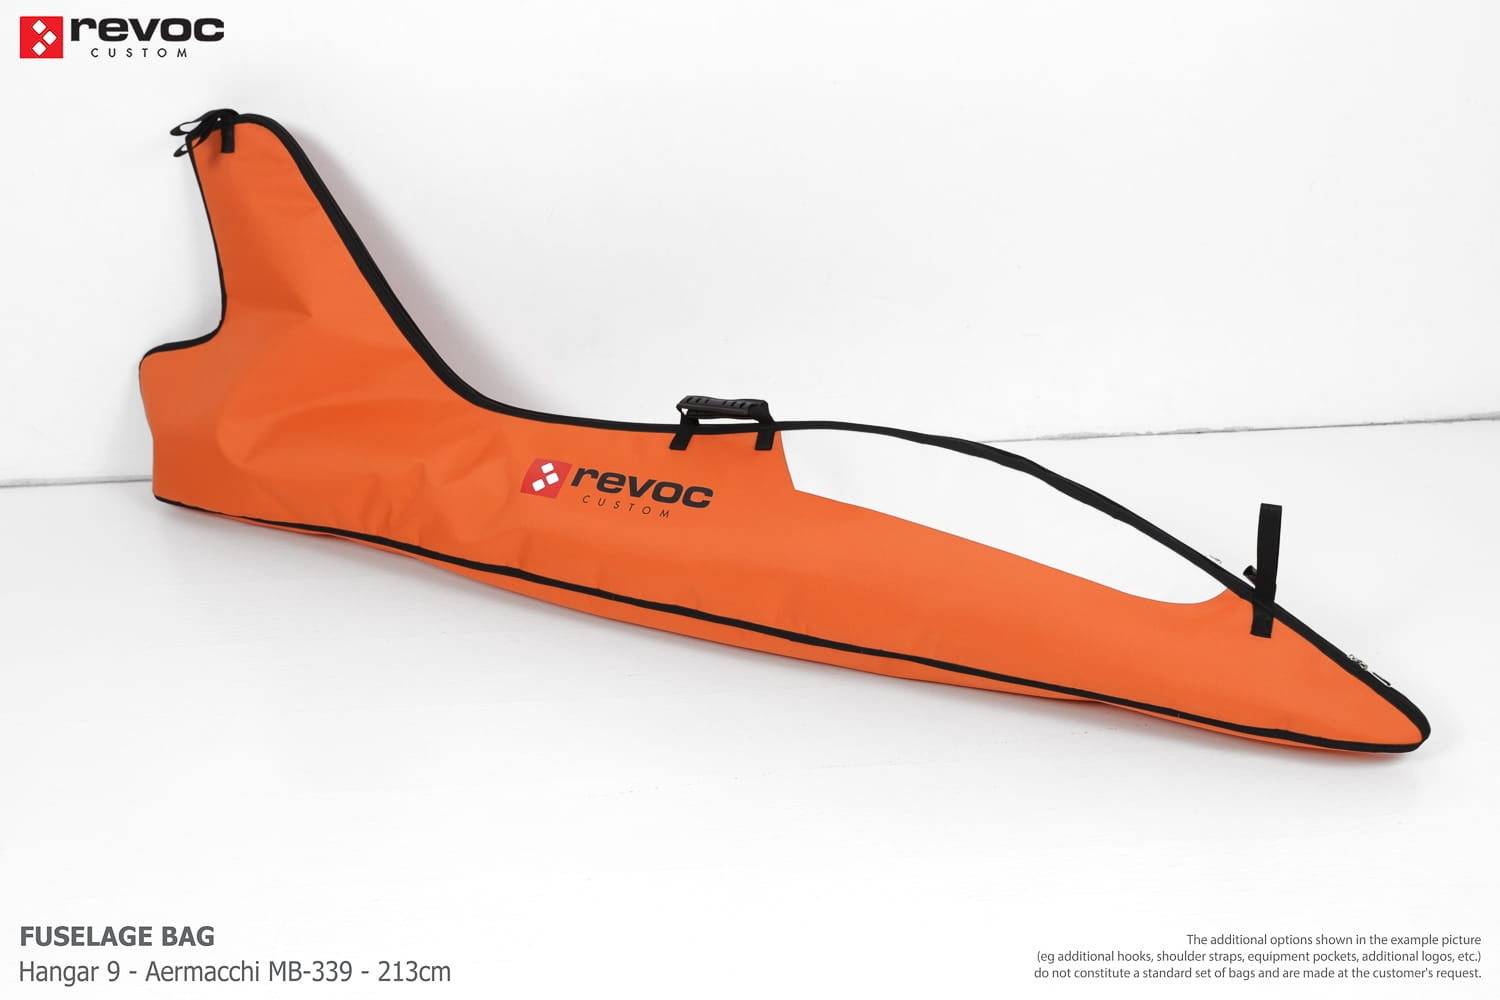 Revoc Standard Line Material Fuselage Bag Orange for Hangar 9 - Aermacchi MB-339 - 213cm